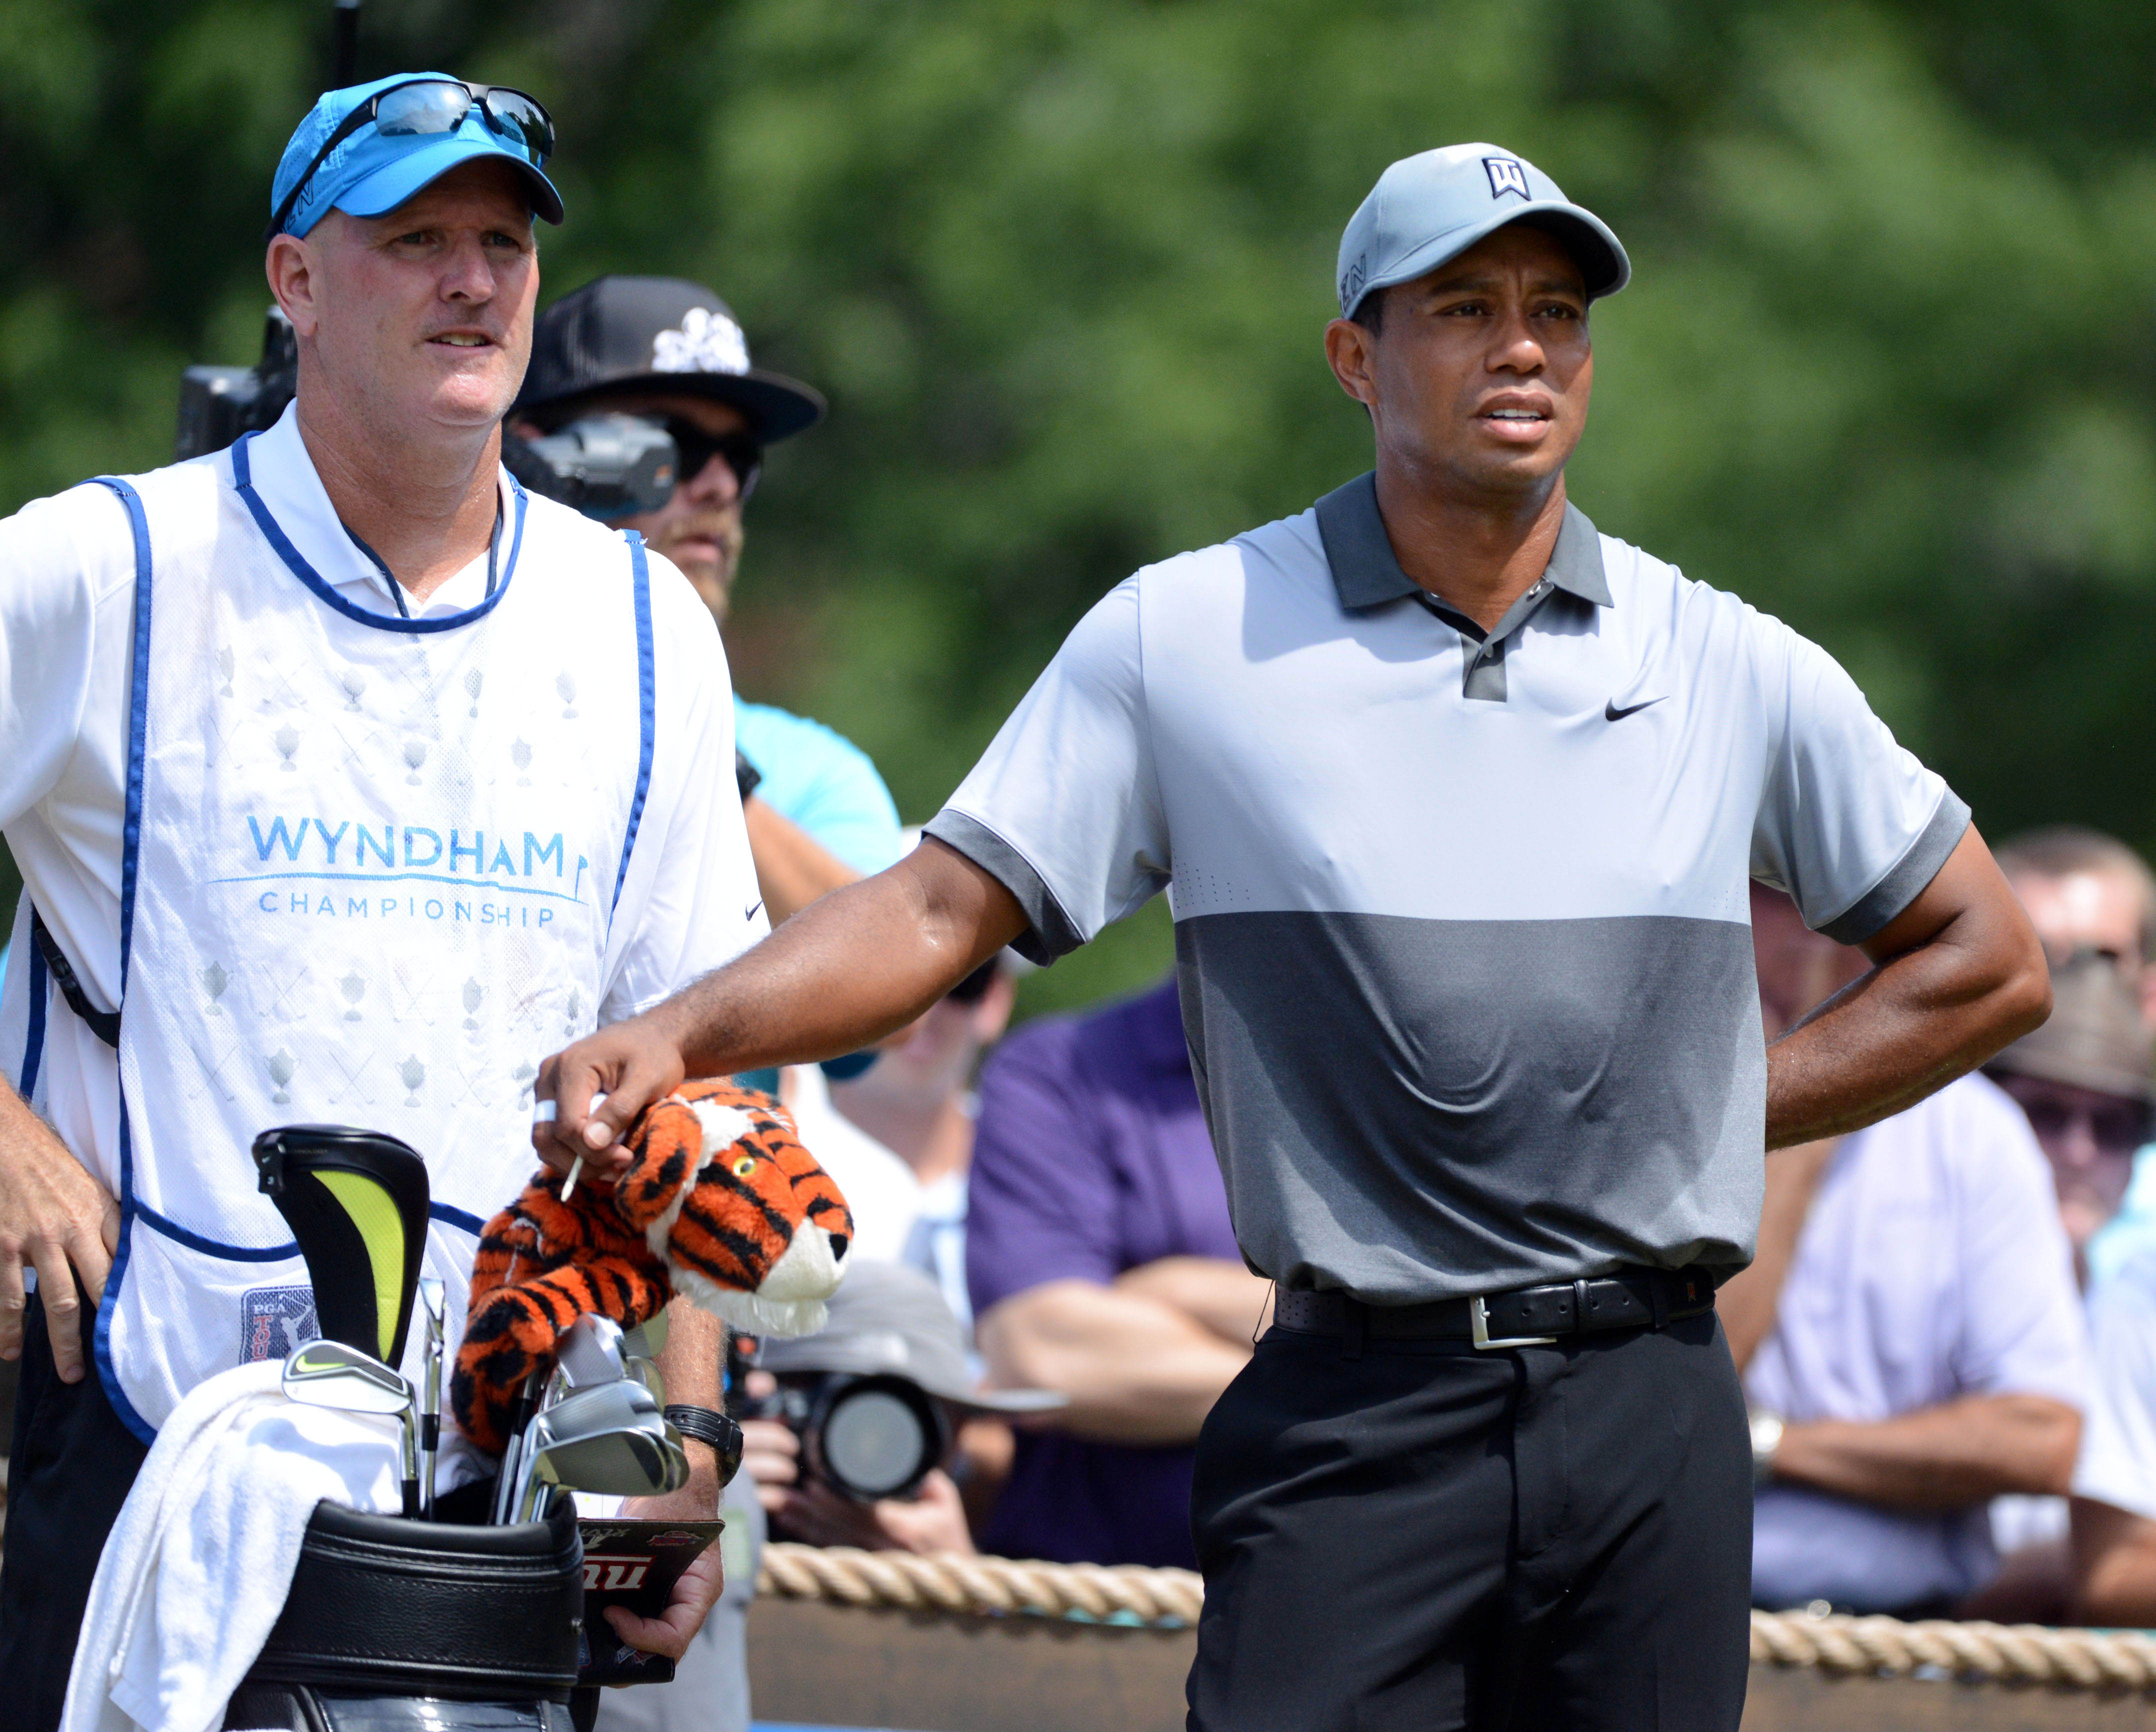 Tiger Woods in striking distance at Wyndham Championship